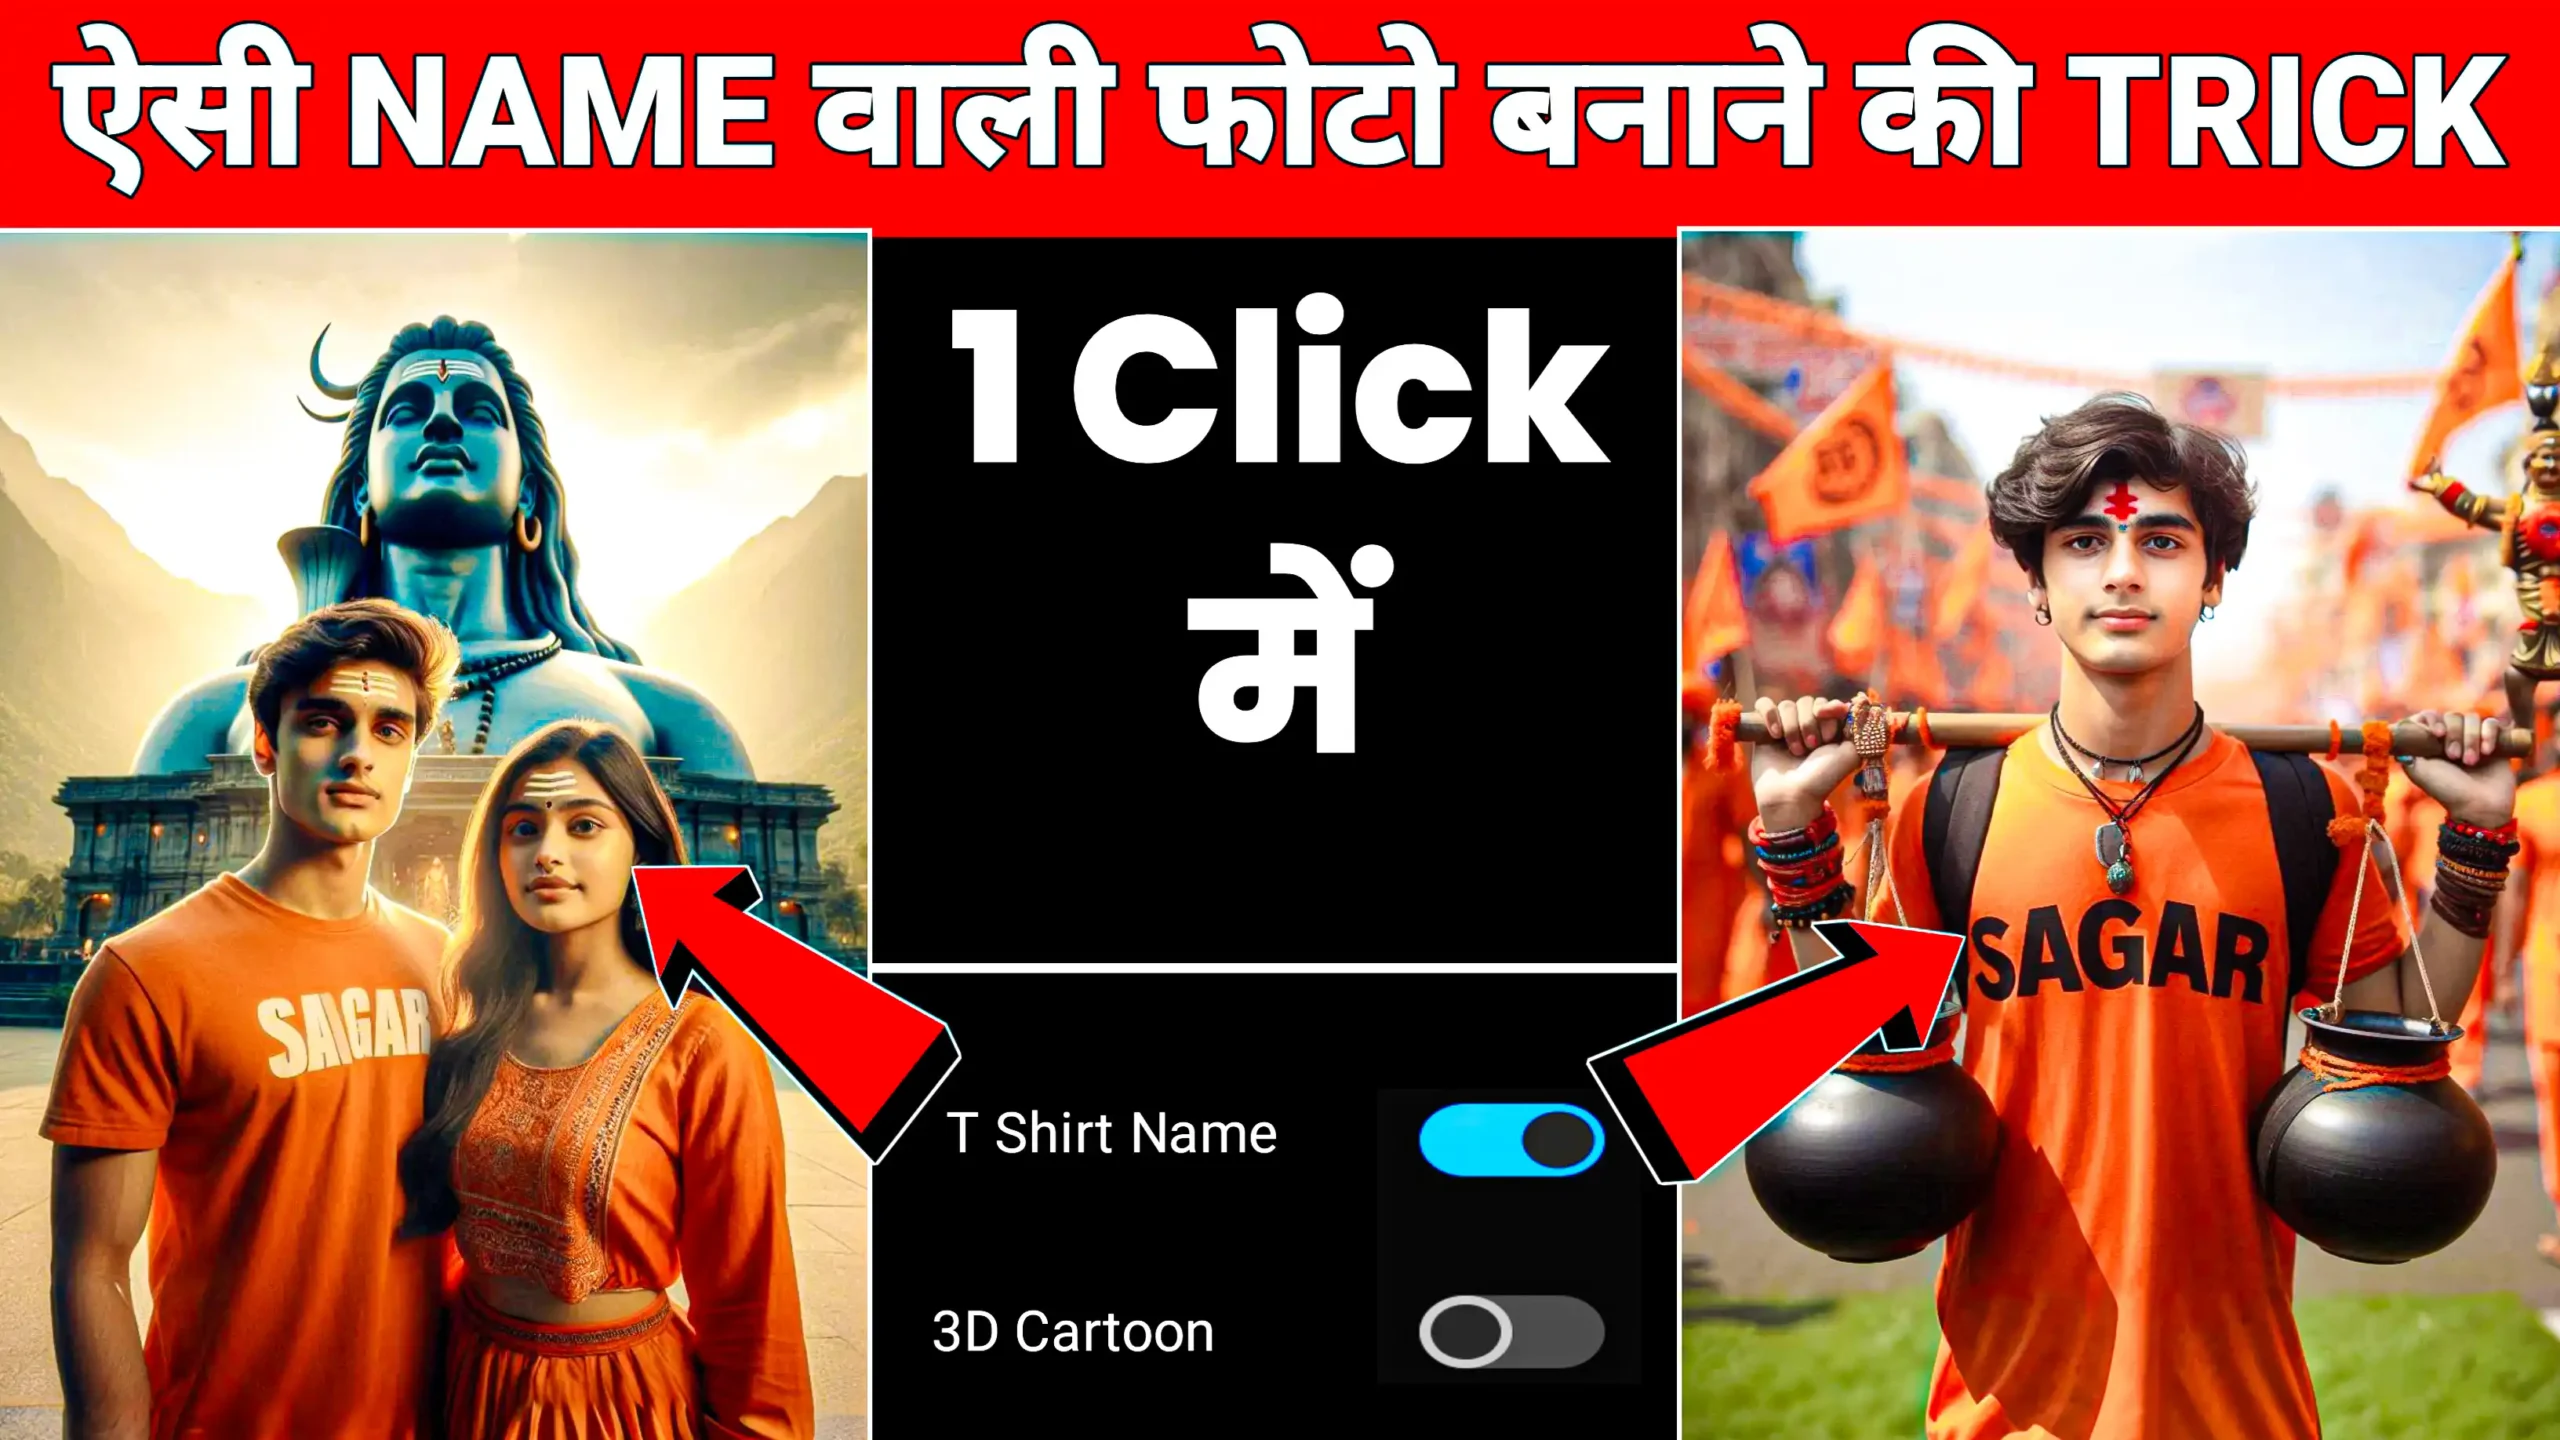 Bing AI BolBam Mahadev T Shirt Name Prompts